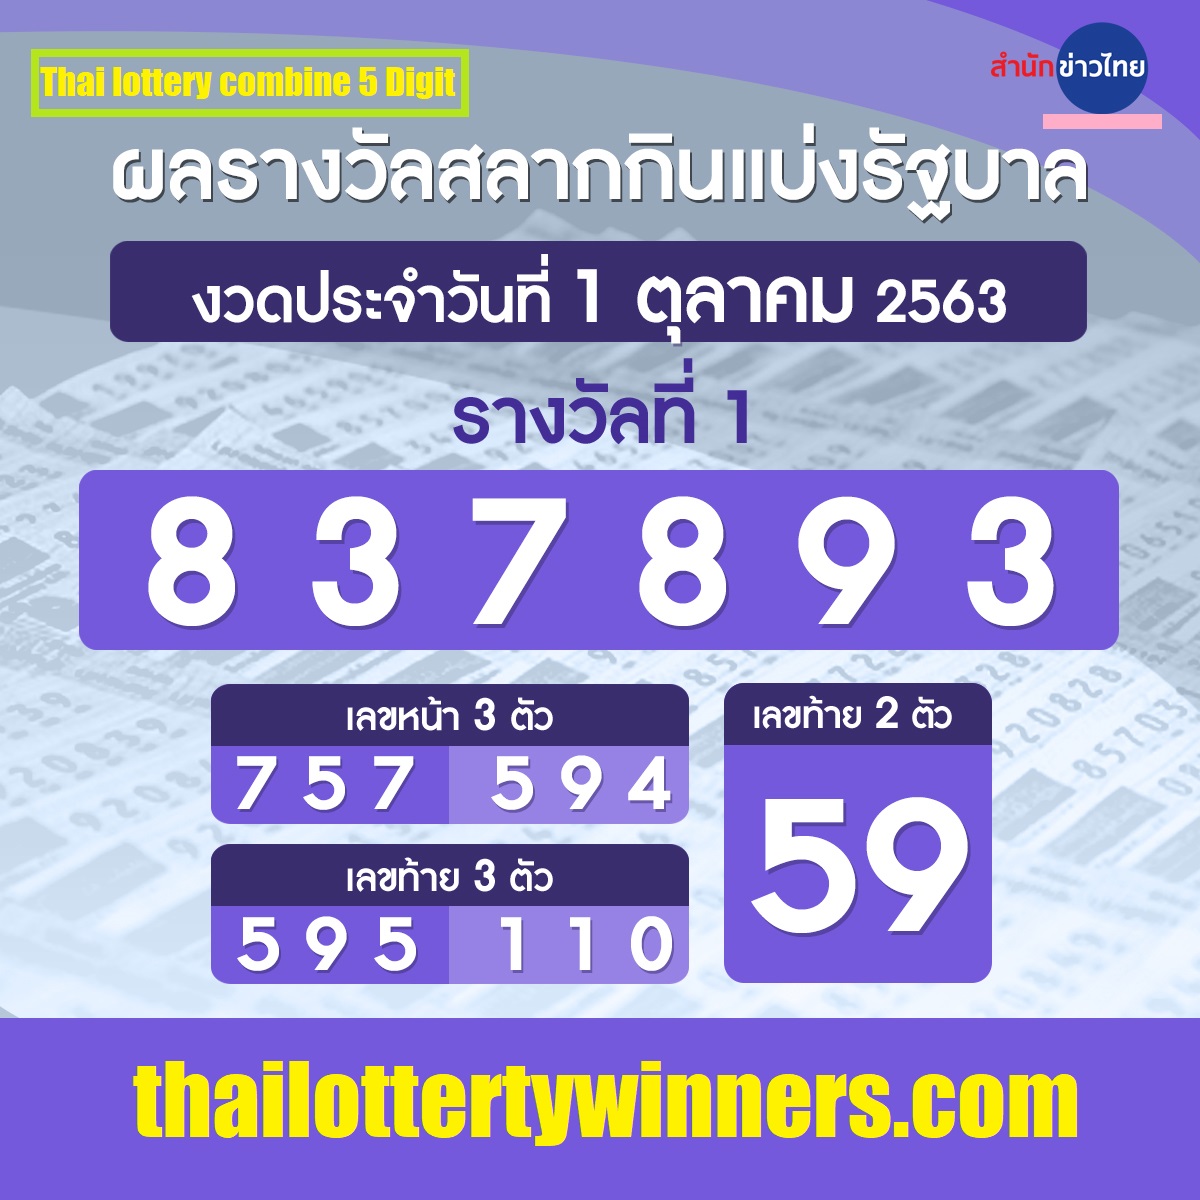 Thai Lottery OK